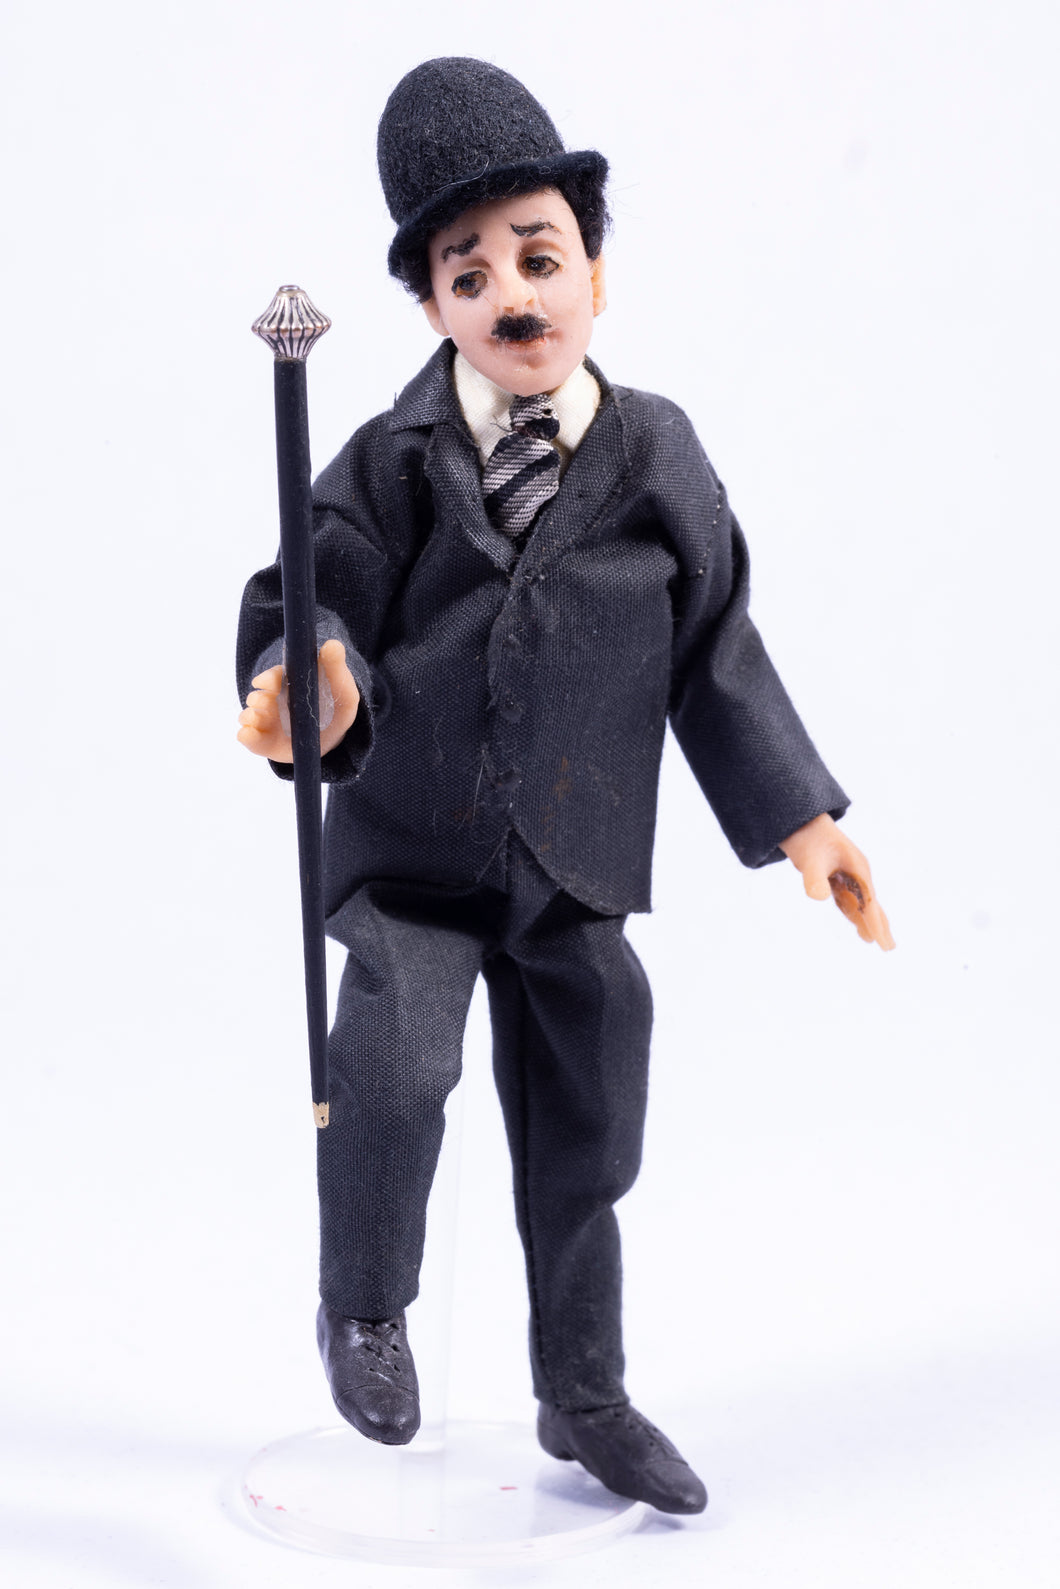 Charle Chaplin Hand Sculpted Doll